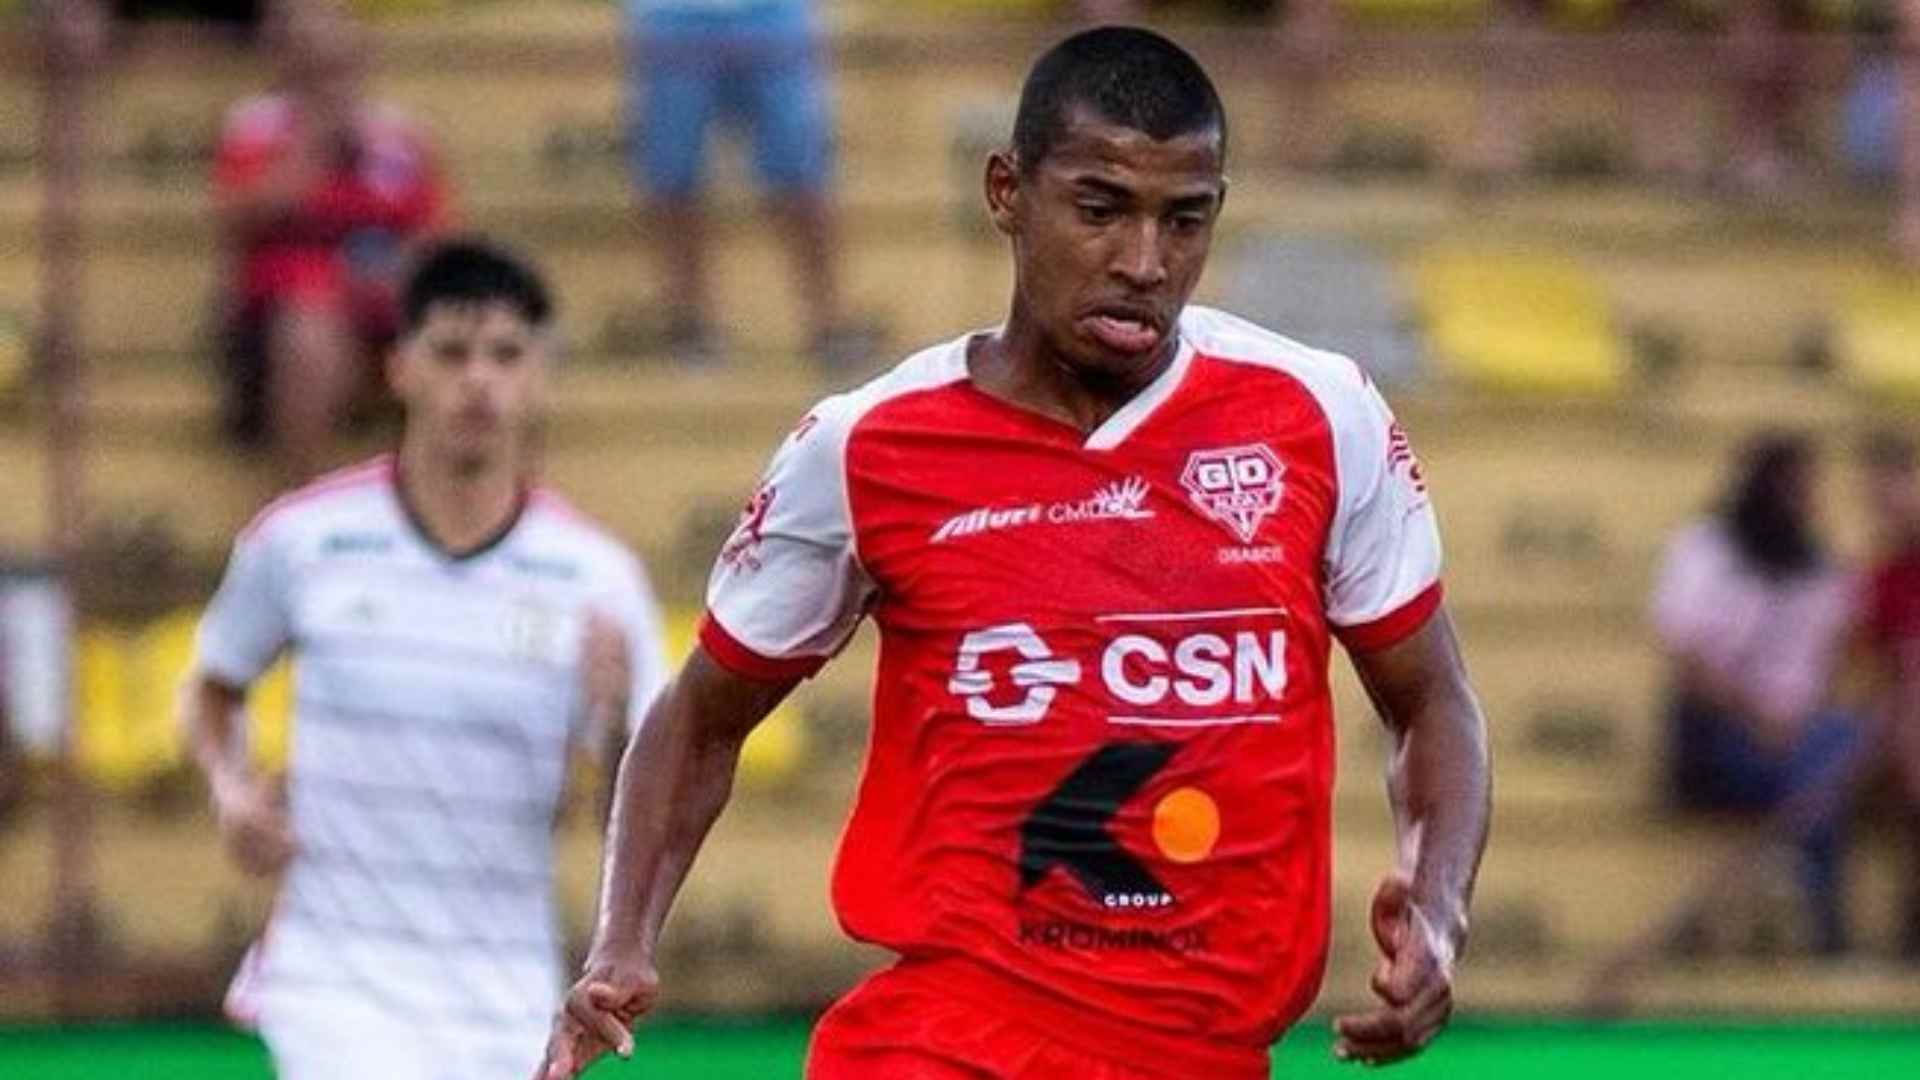  Dado Rodrigues/G.O. Audax Esporte Clube.